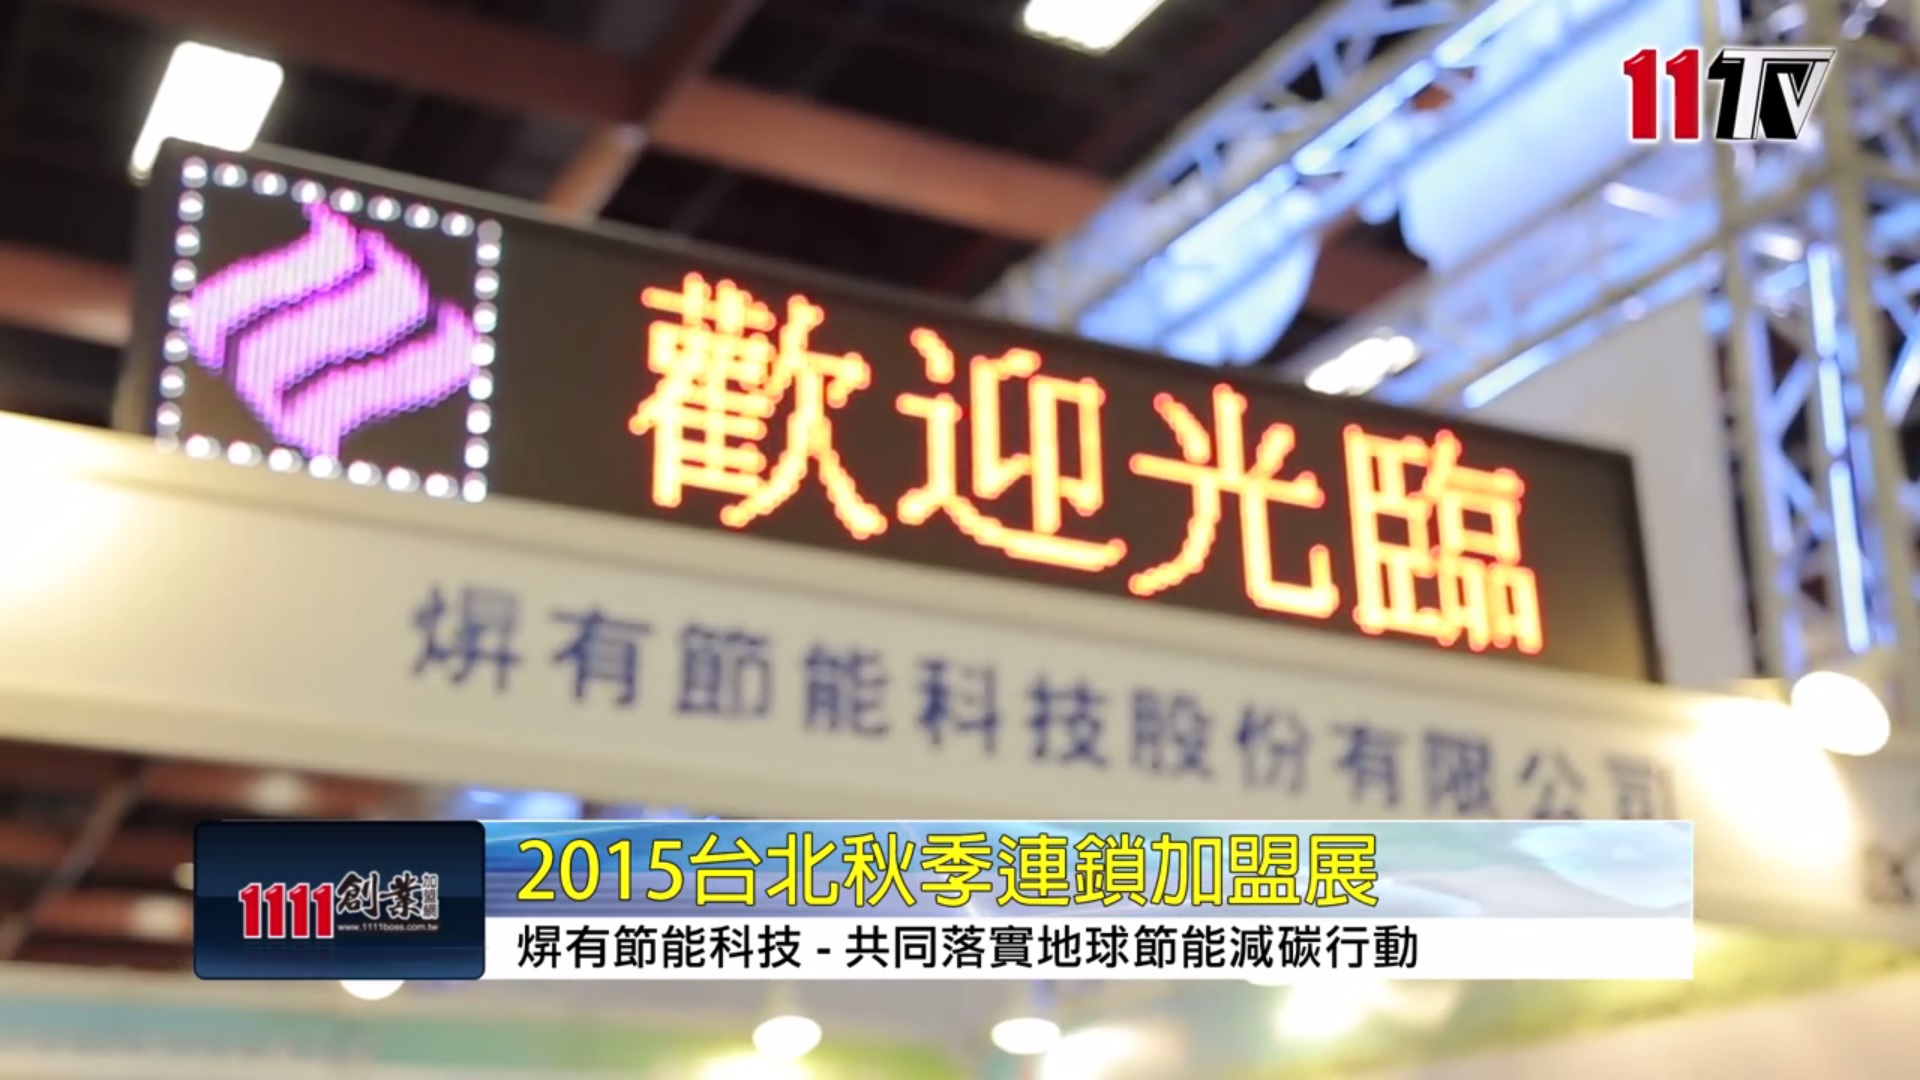 2015 Taipei Venture Franchise Exhiibition的圖片